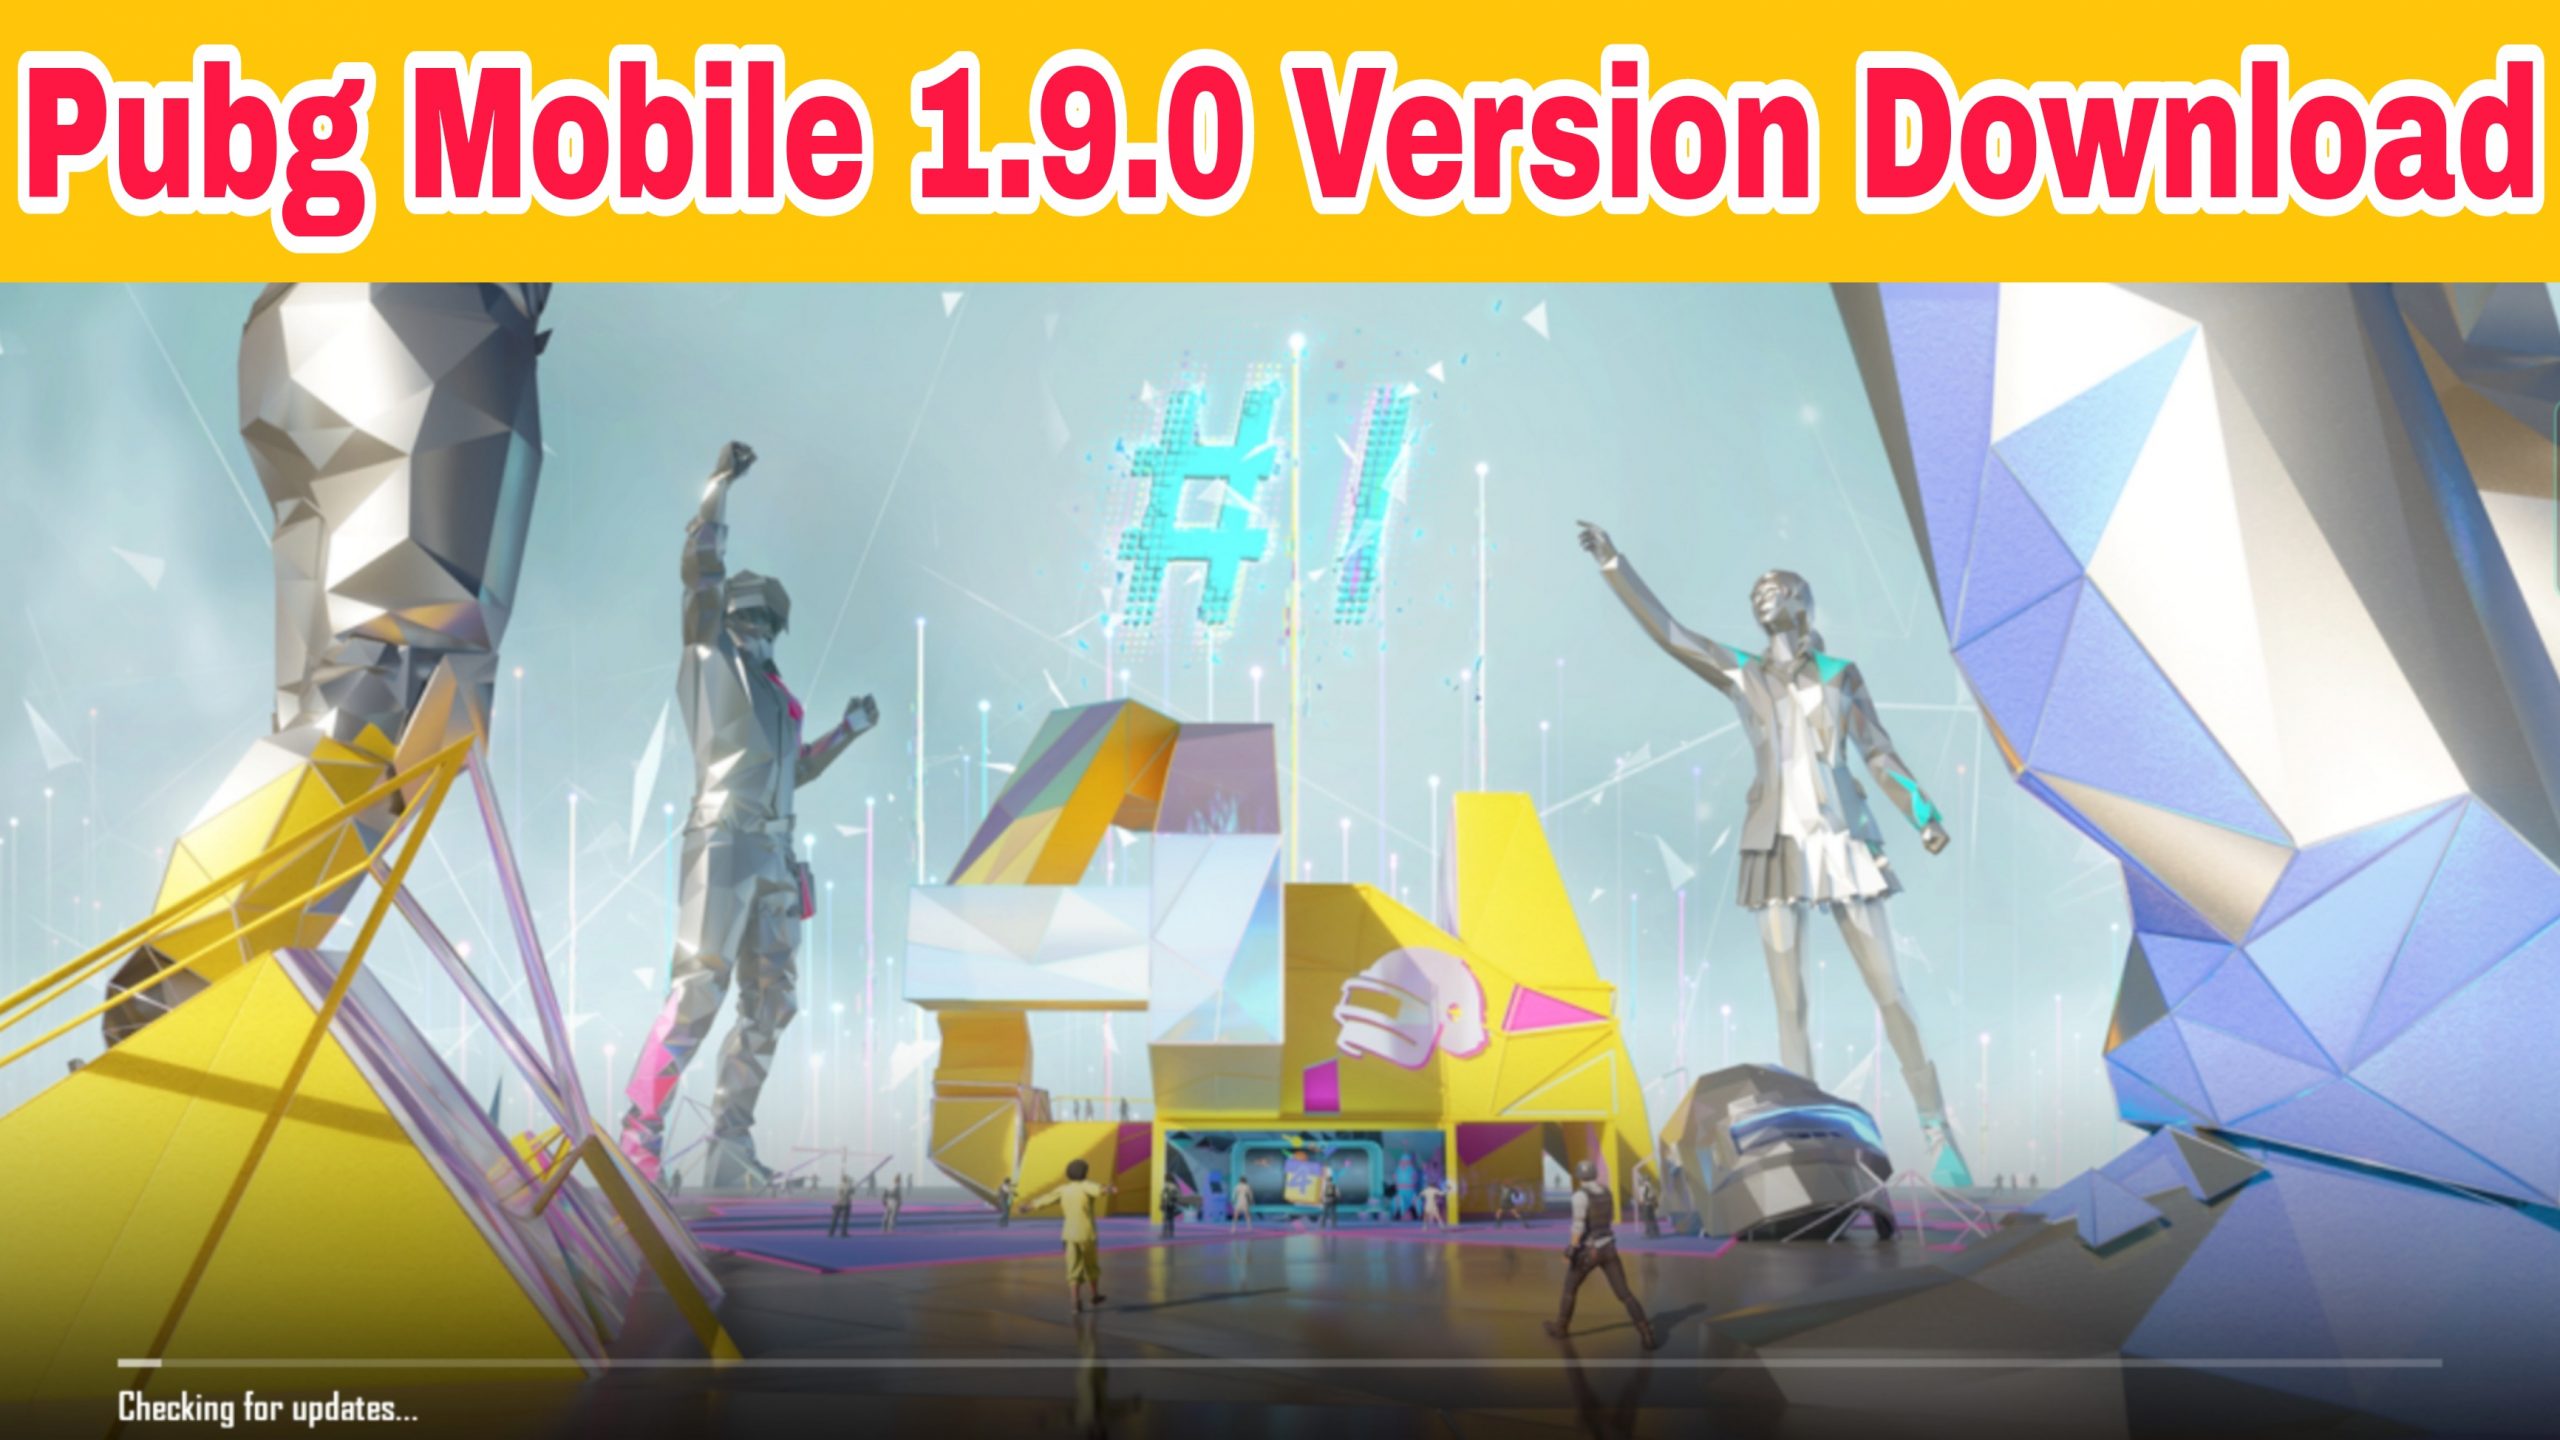 Pubg Mobile 1.9.0 version Download kaise kare